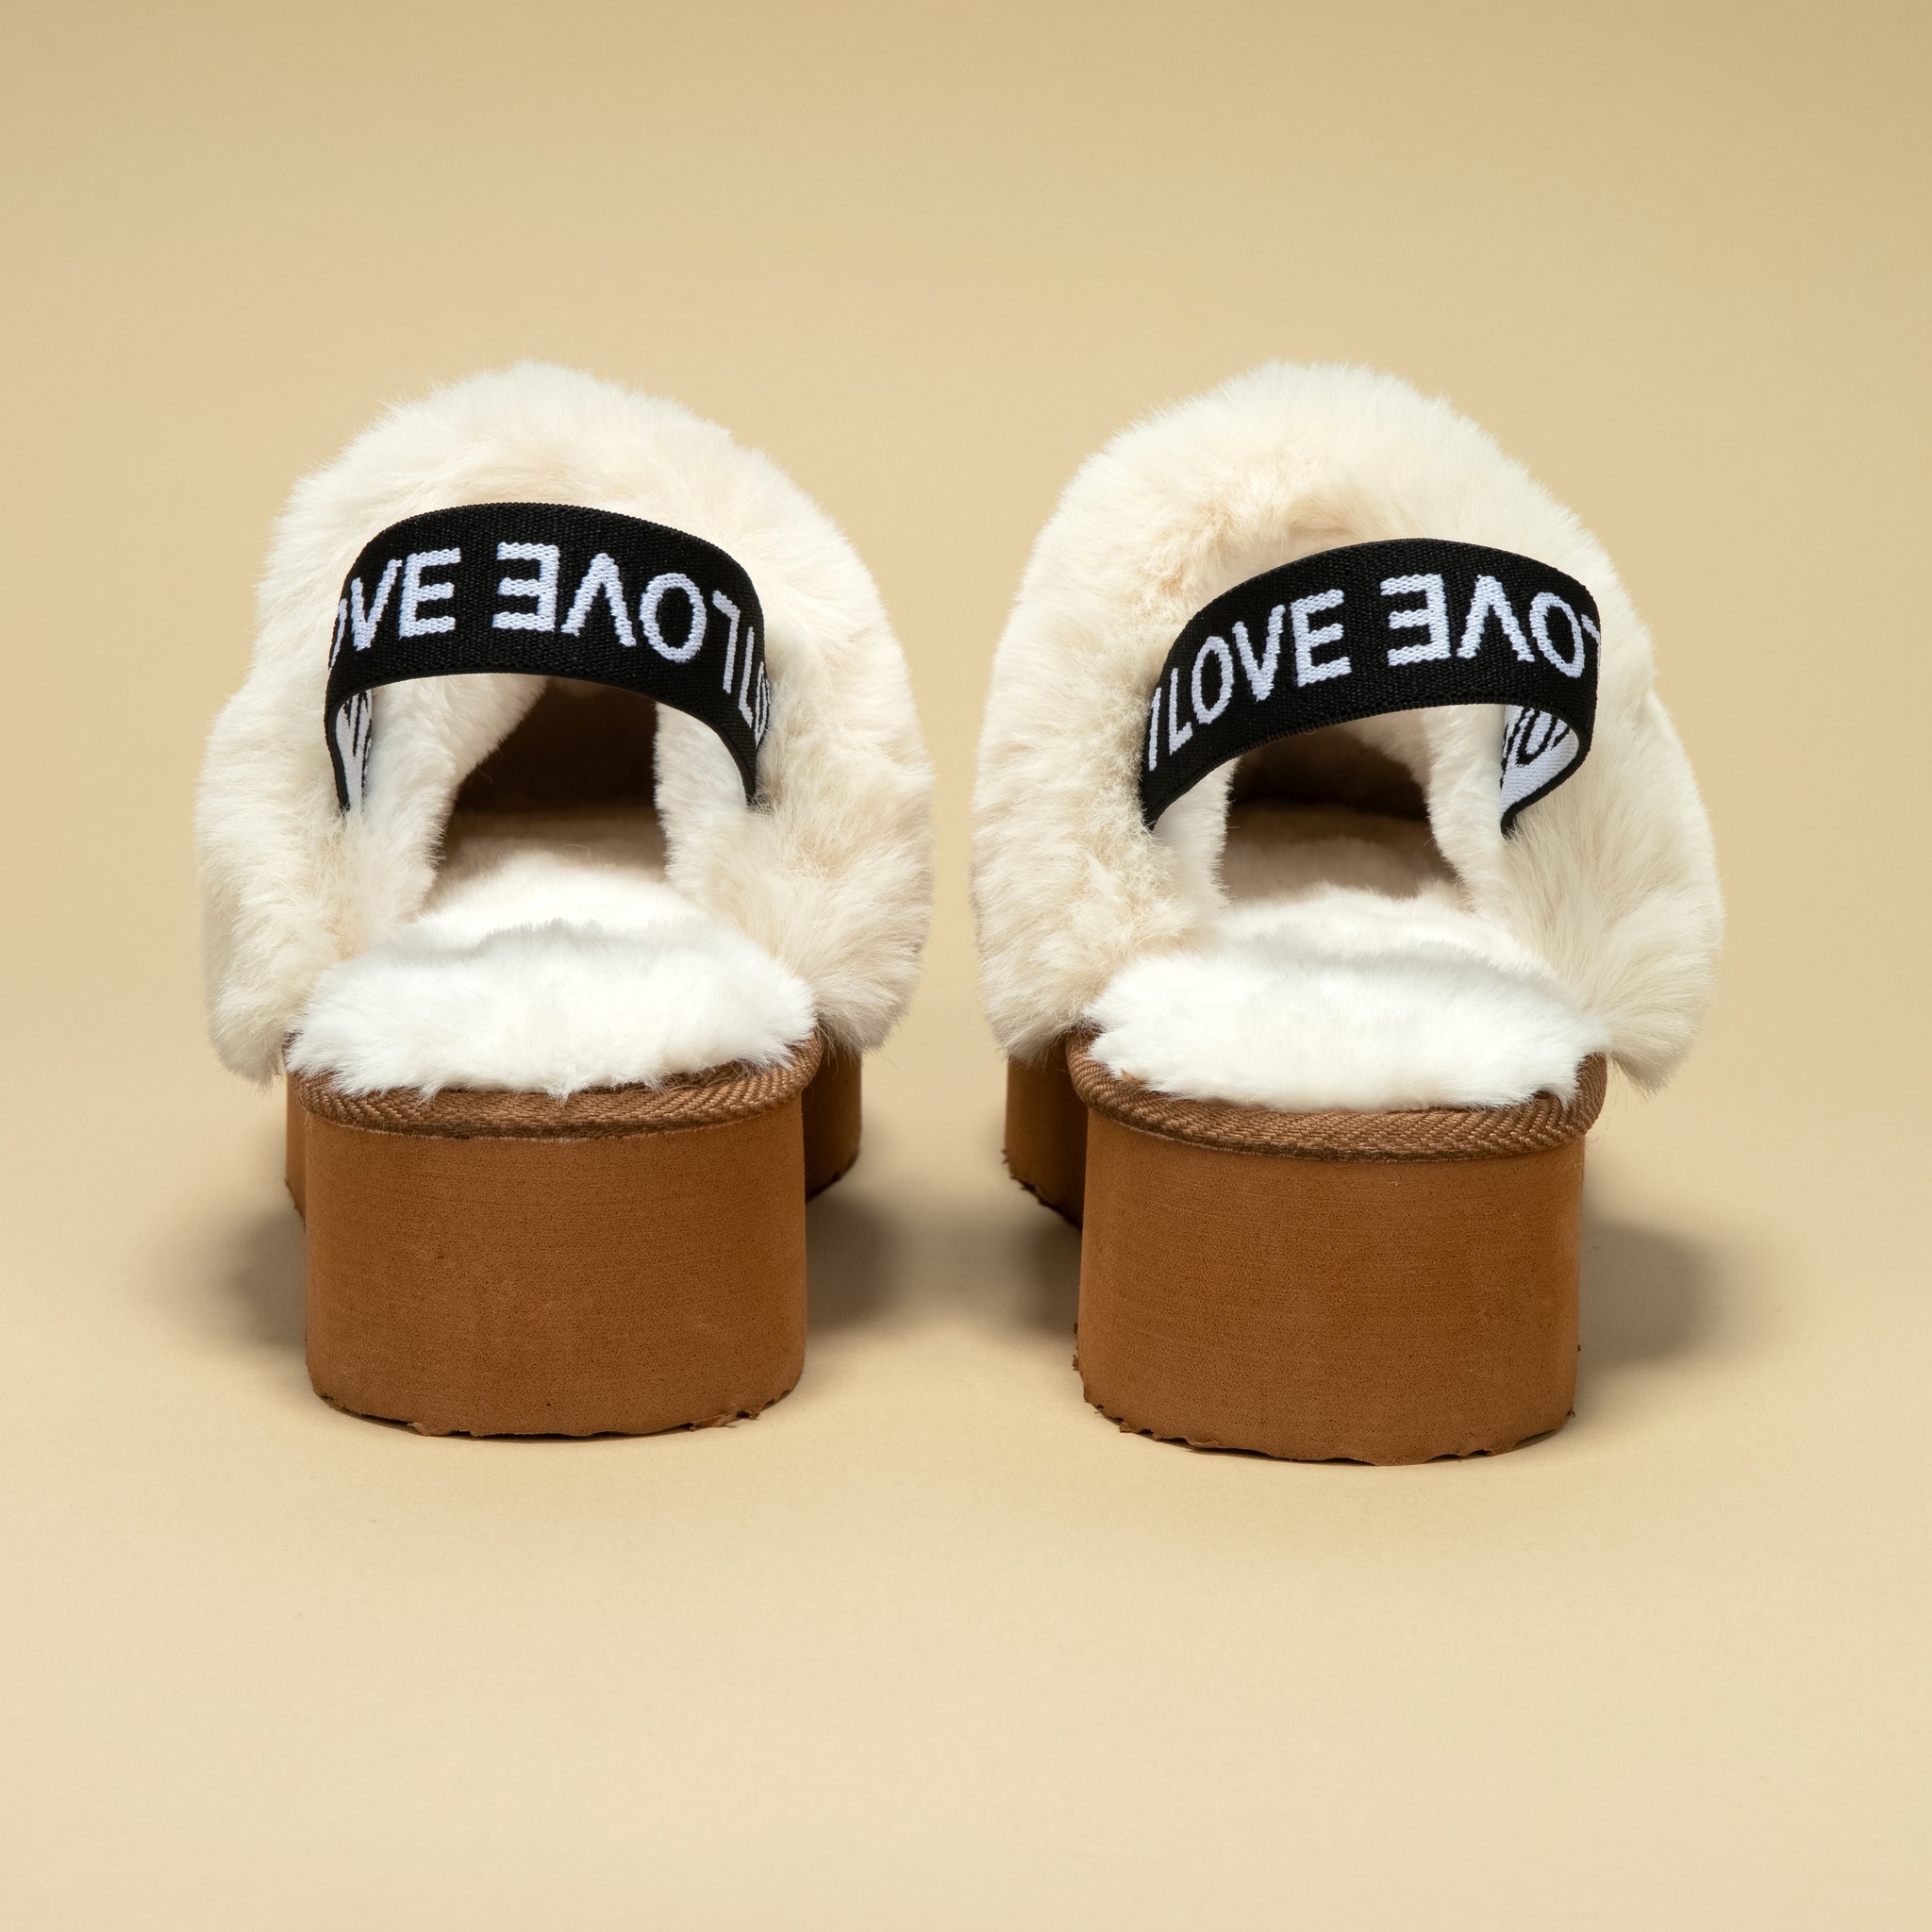 We Love Winter 🤍
מגוון נעליים לנשים בריפוד פרווה מפנקת לחורף - מחכה לך עכשיו בחנויות רשת 